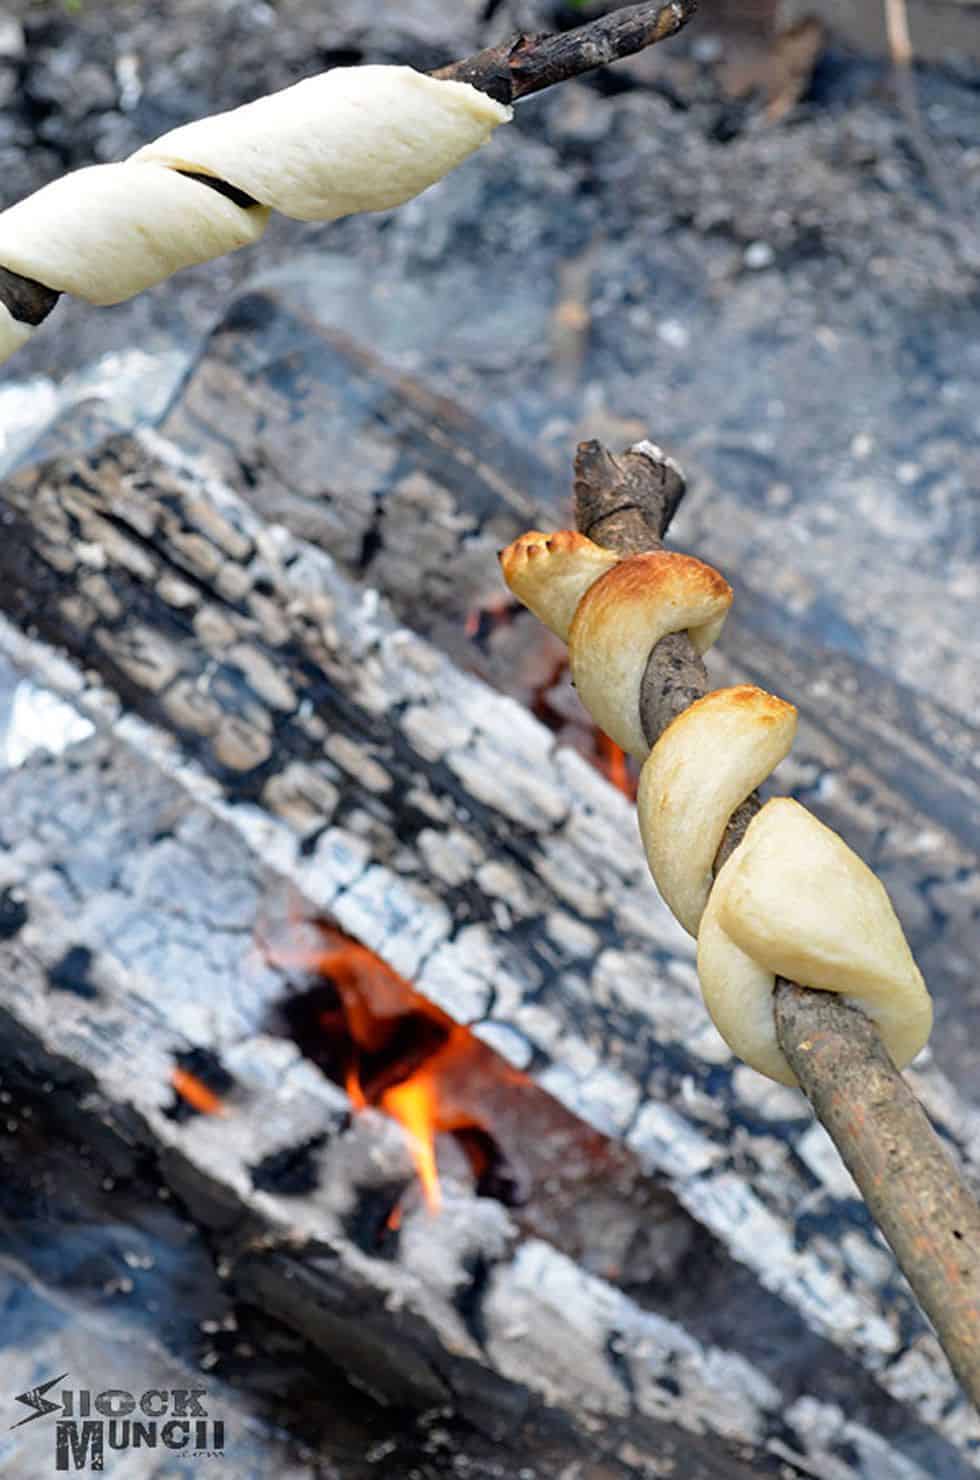 Campfire breadsticks